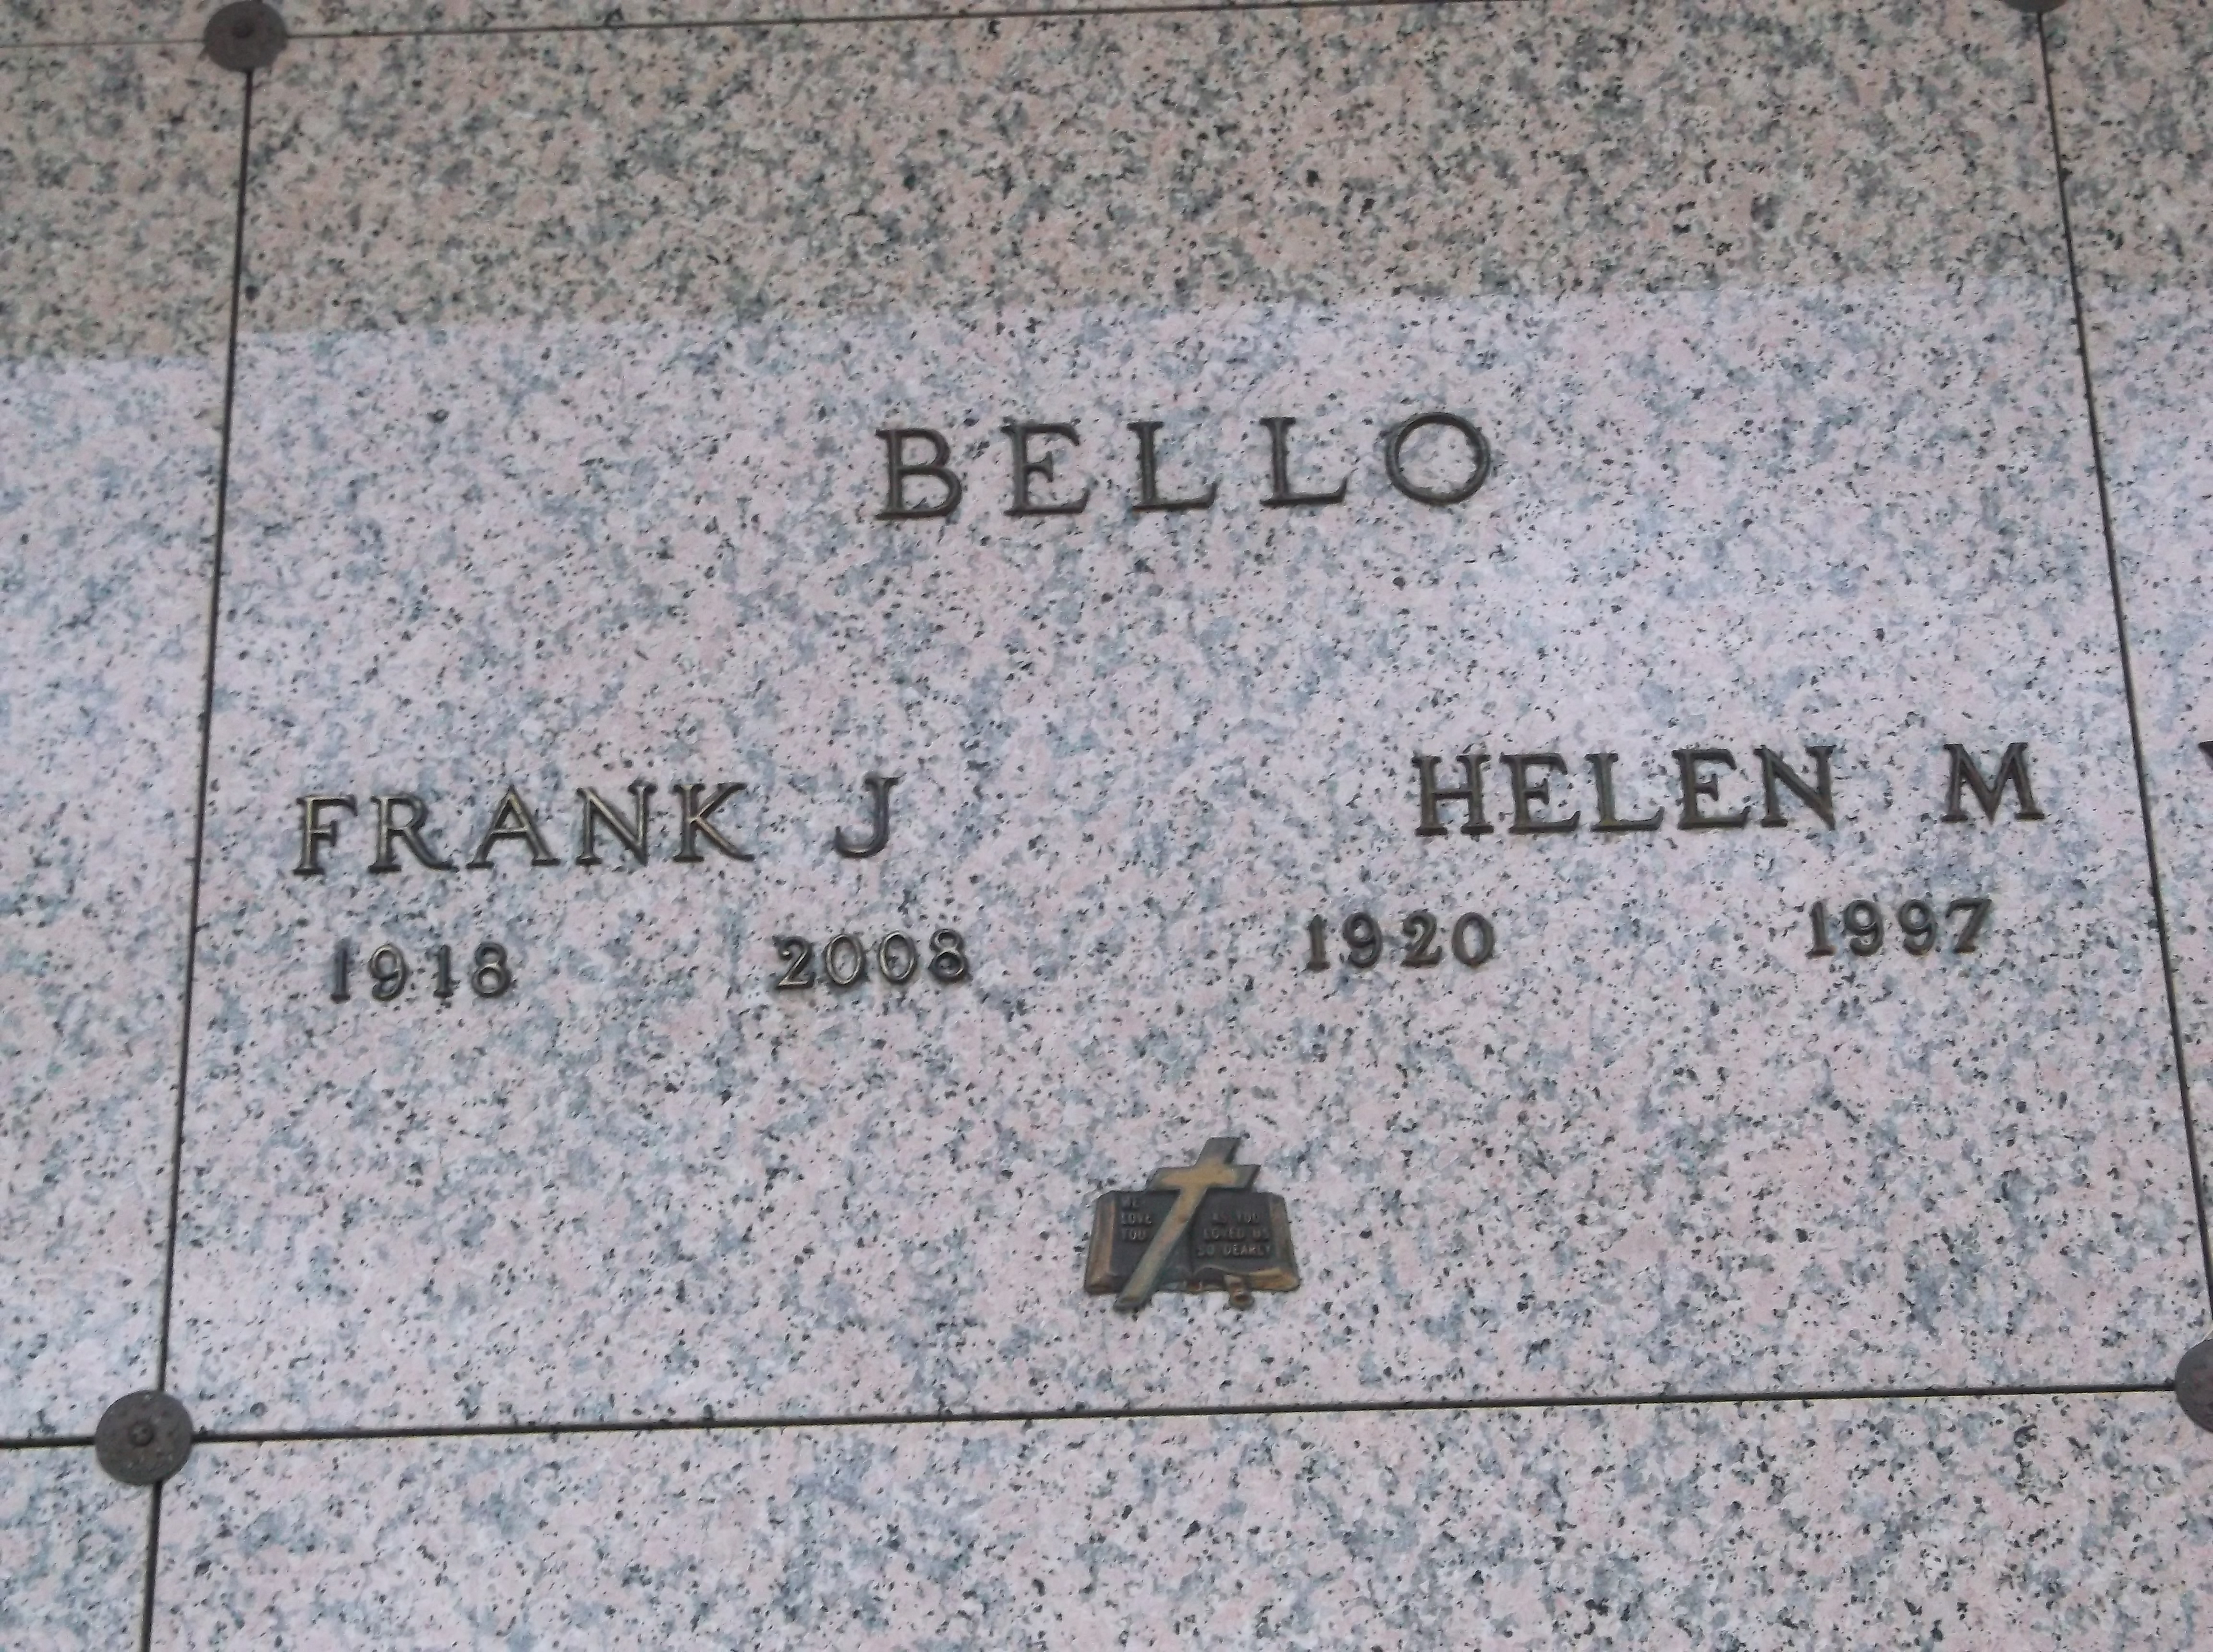 Frank J Bello